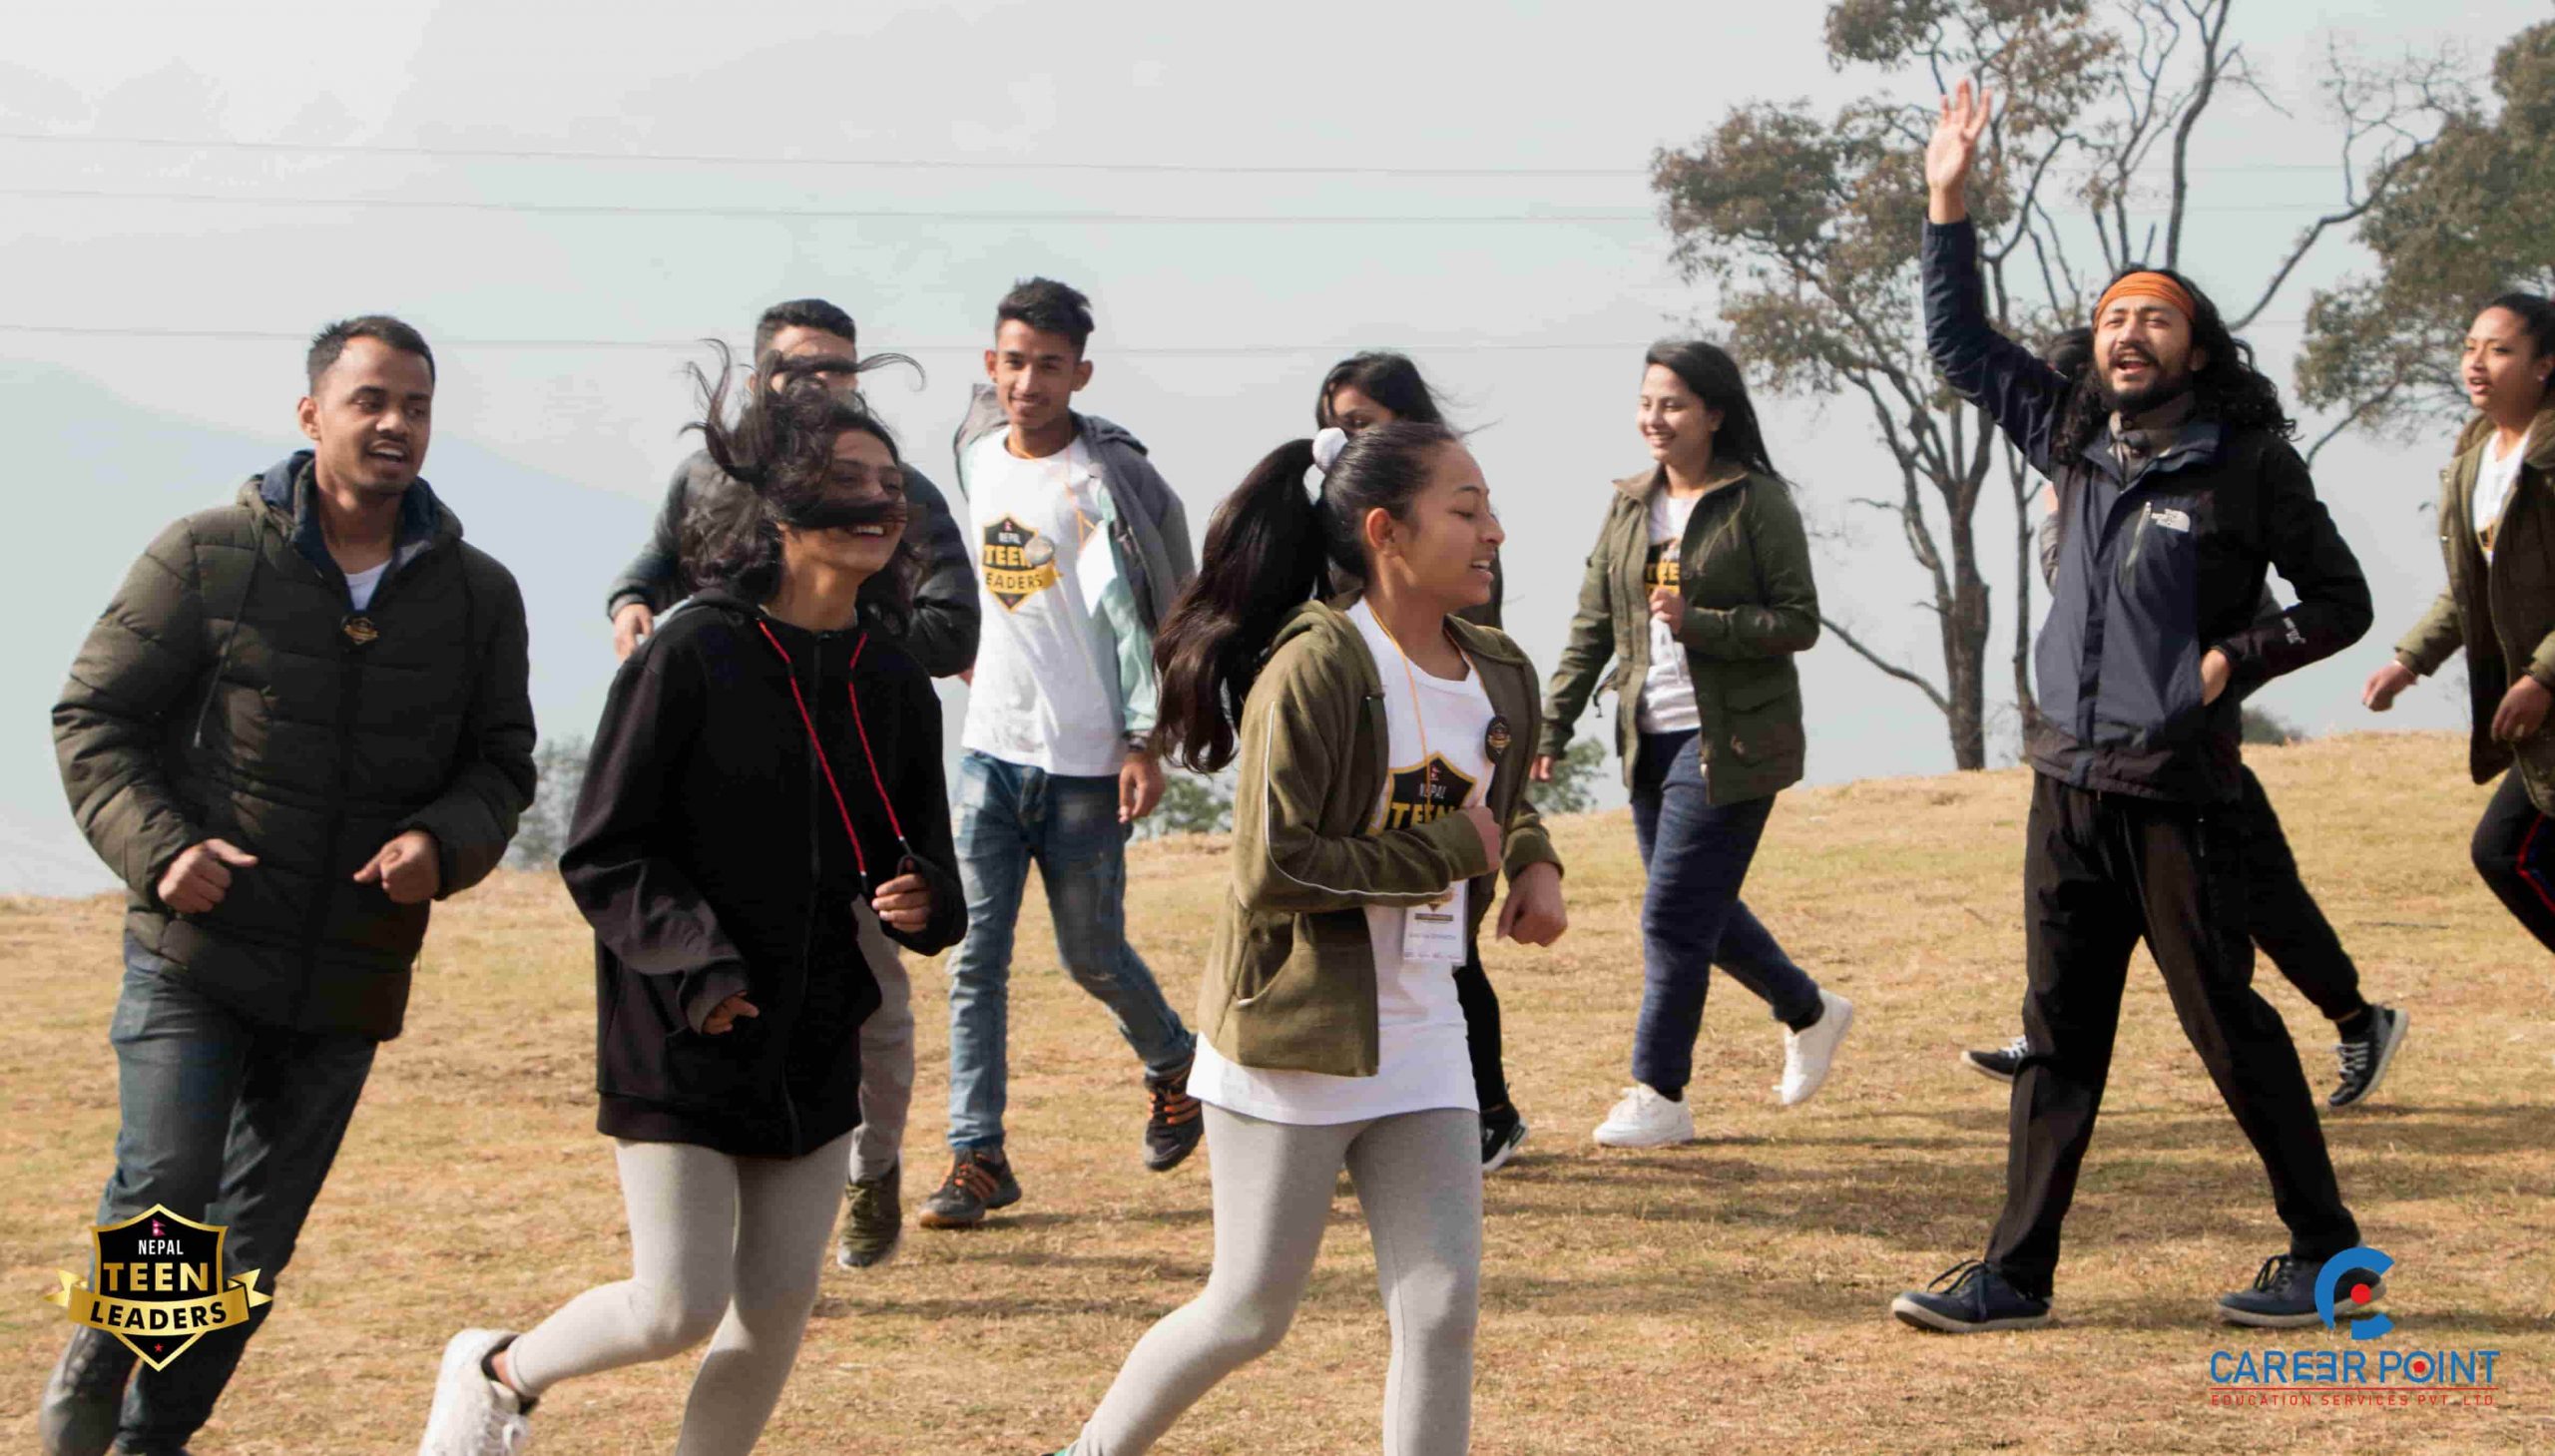 Nepal Teen Leaders: Going beyond the basics